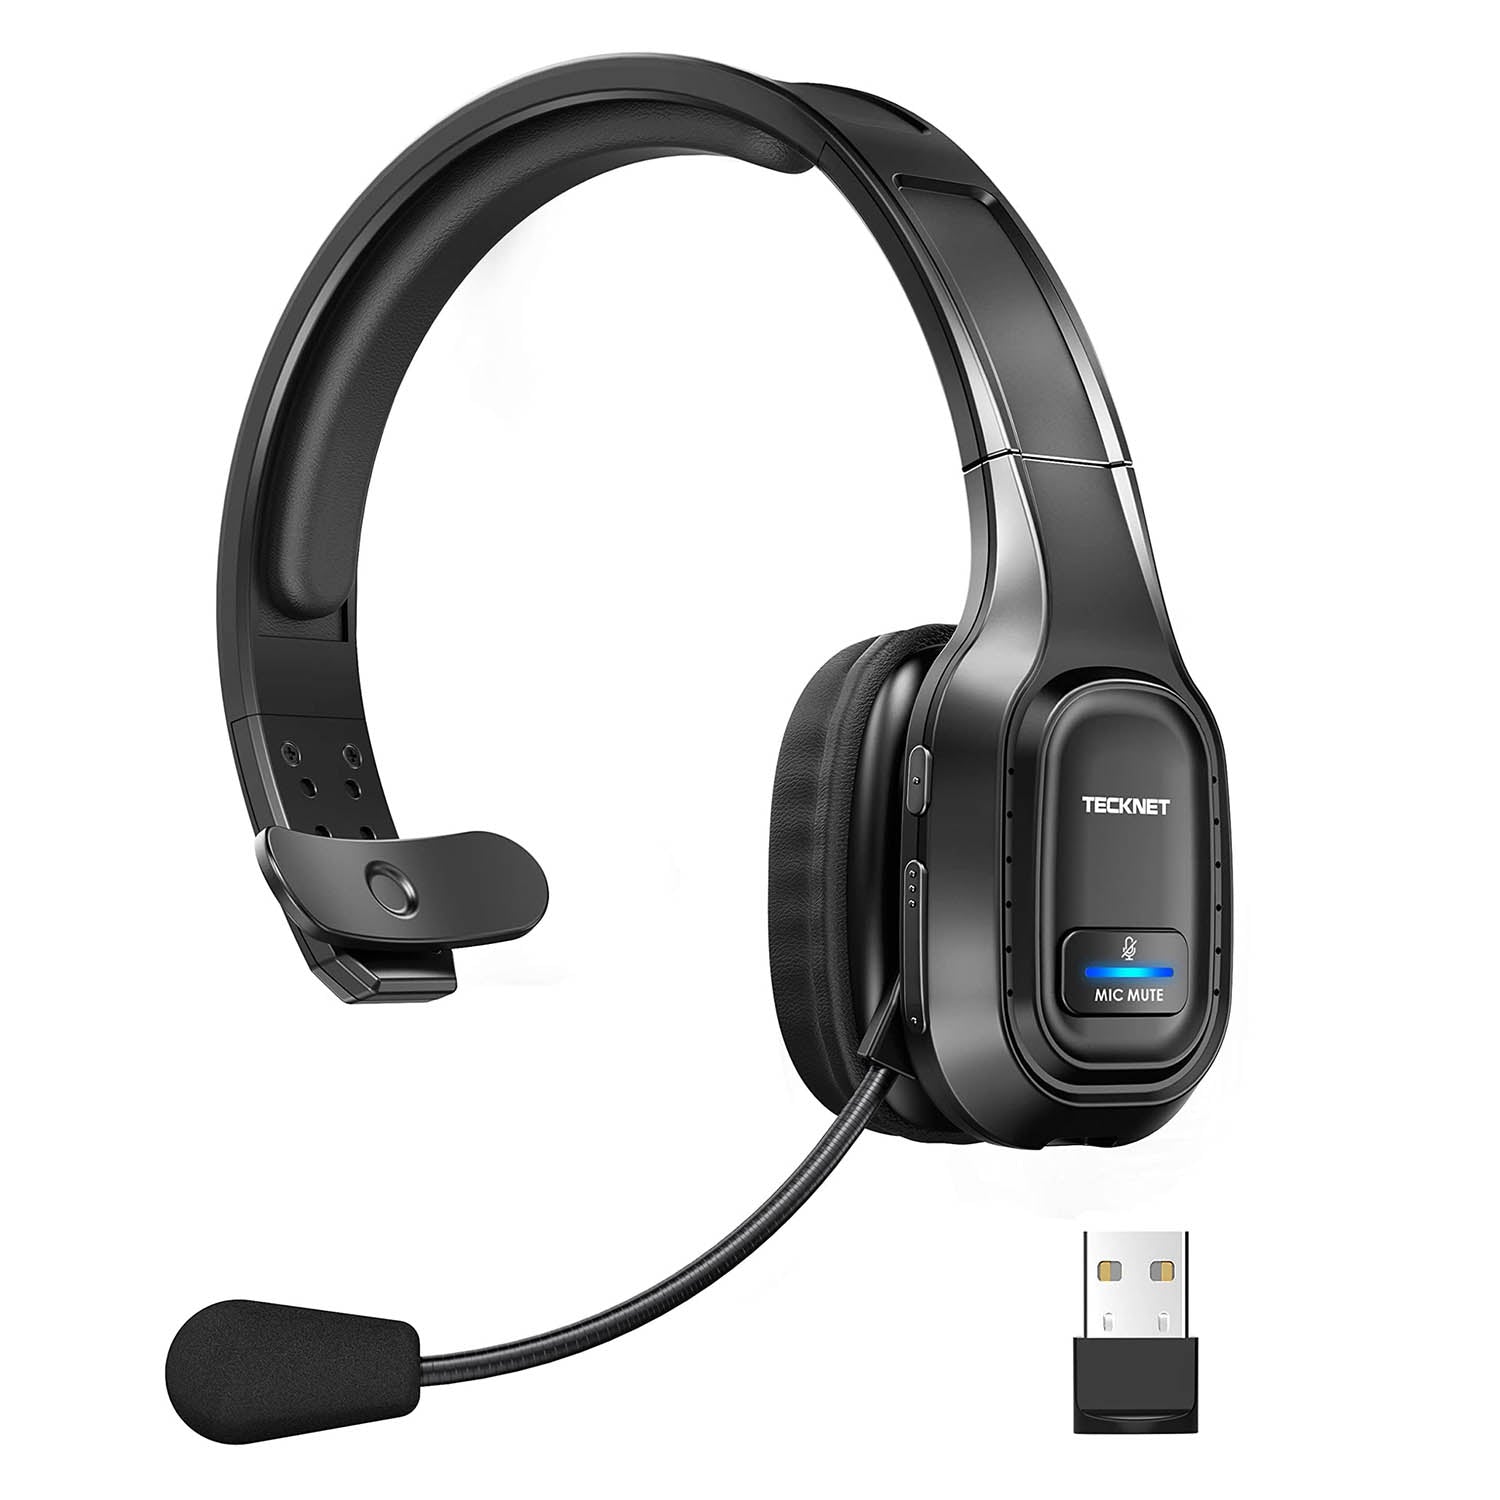 Fix for bluetooth headphones or speaker using hands-free audio